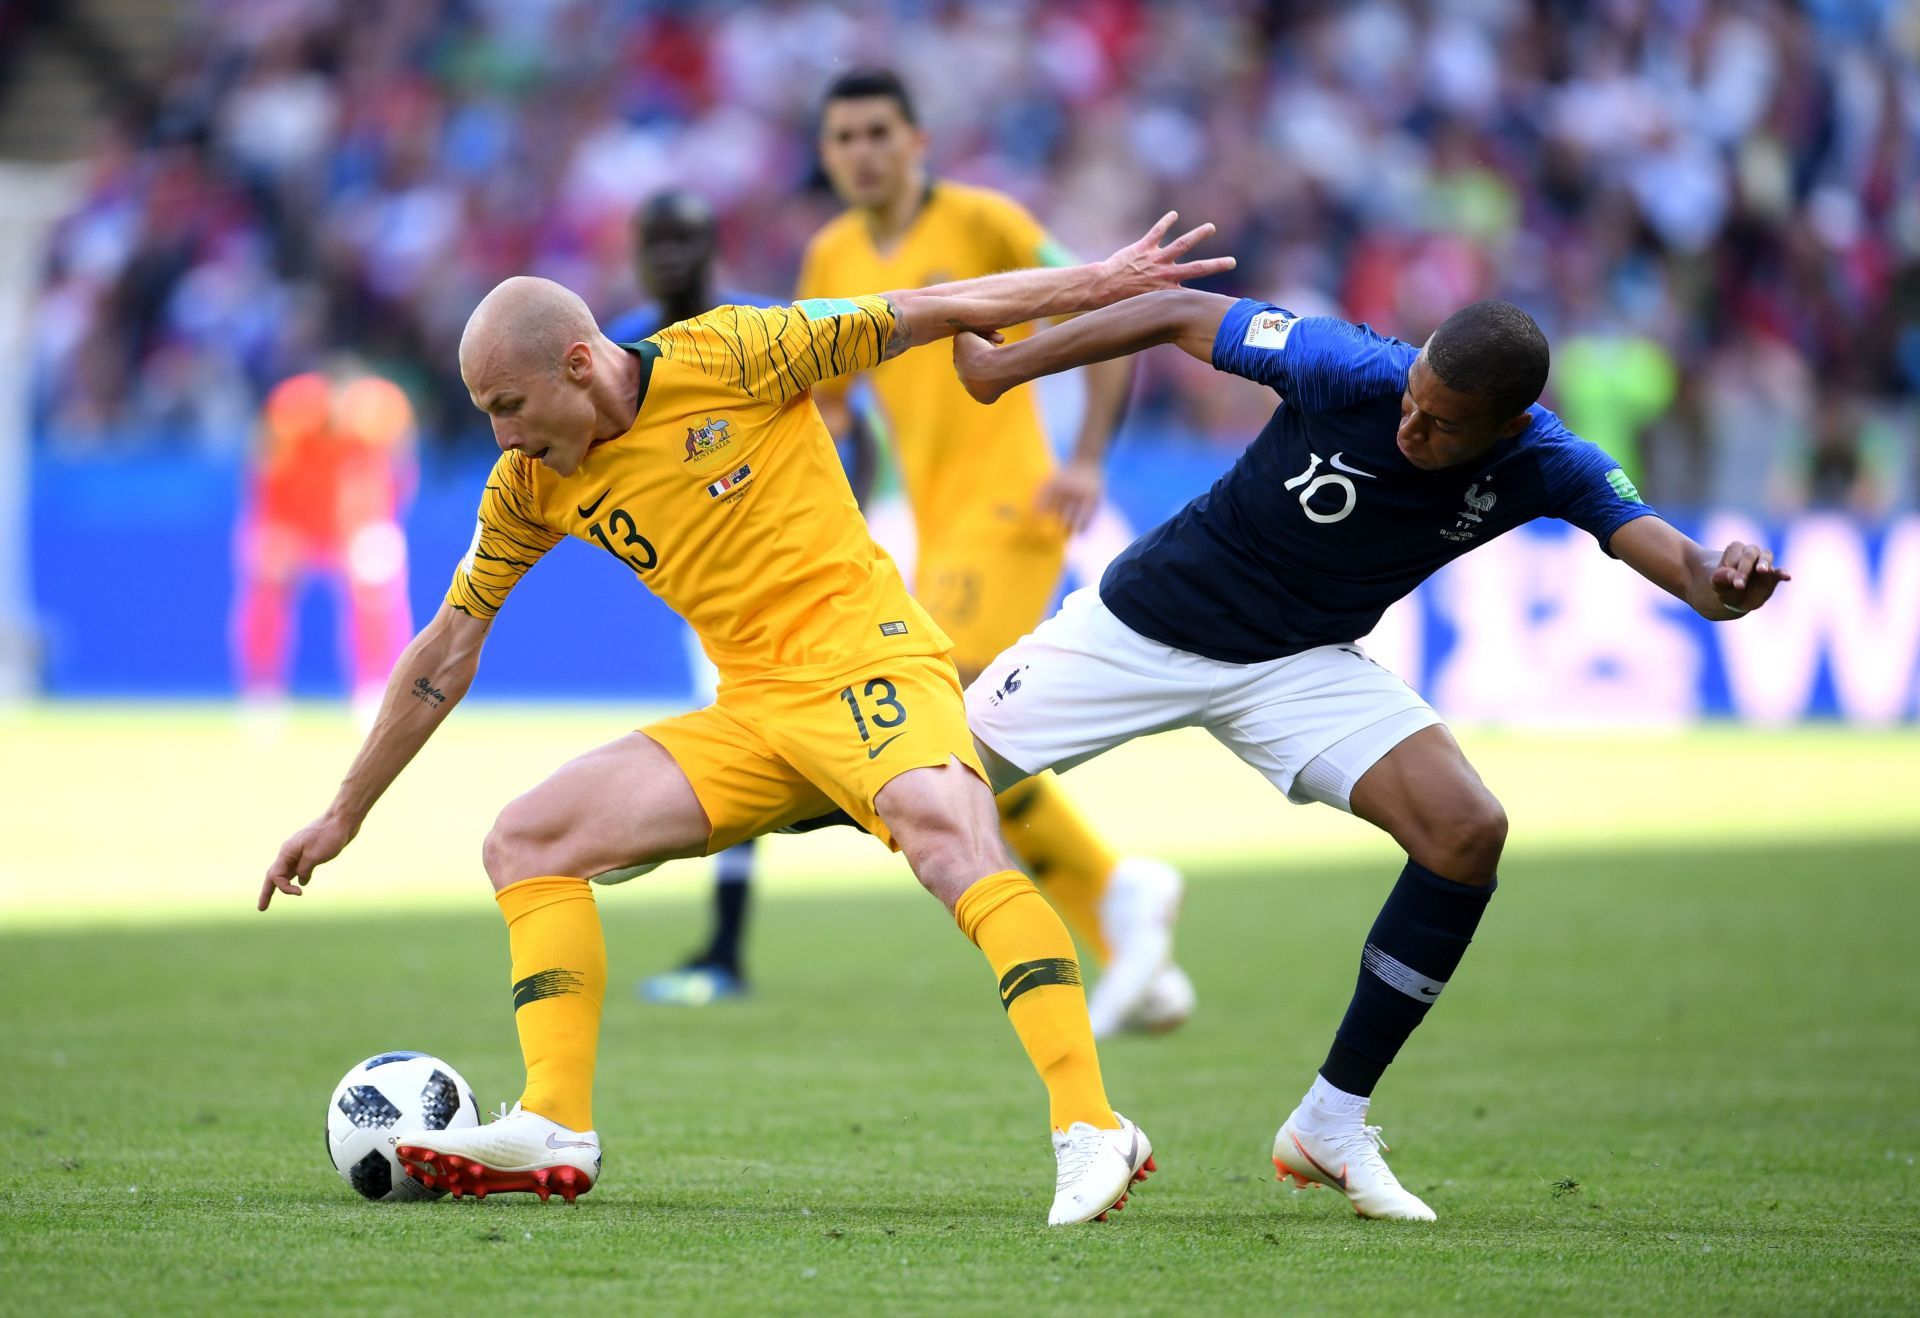 France v Australia: Group C - 2018 FIFA World Cup Russia